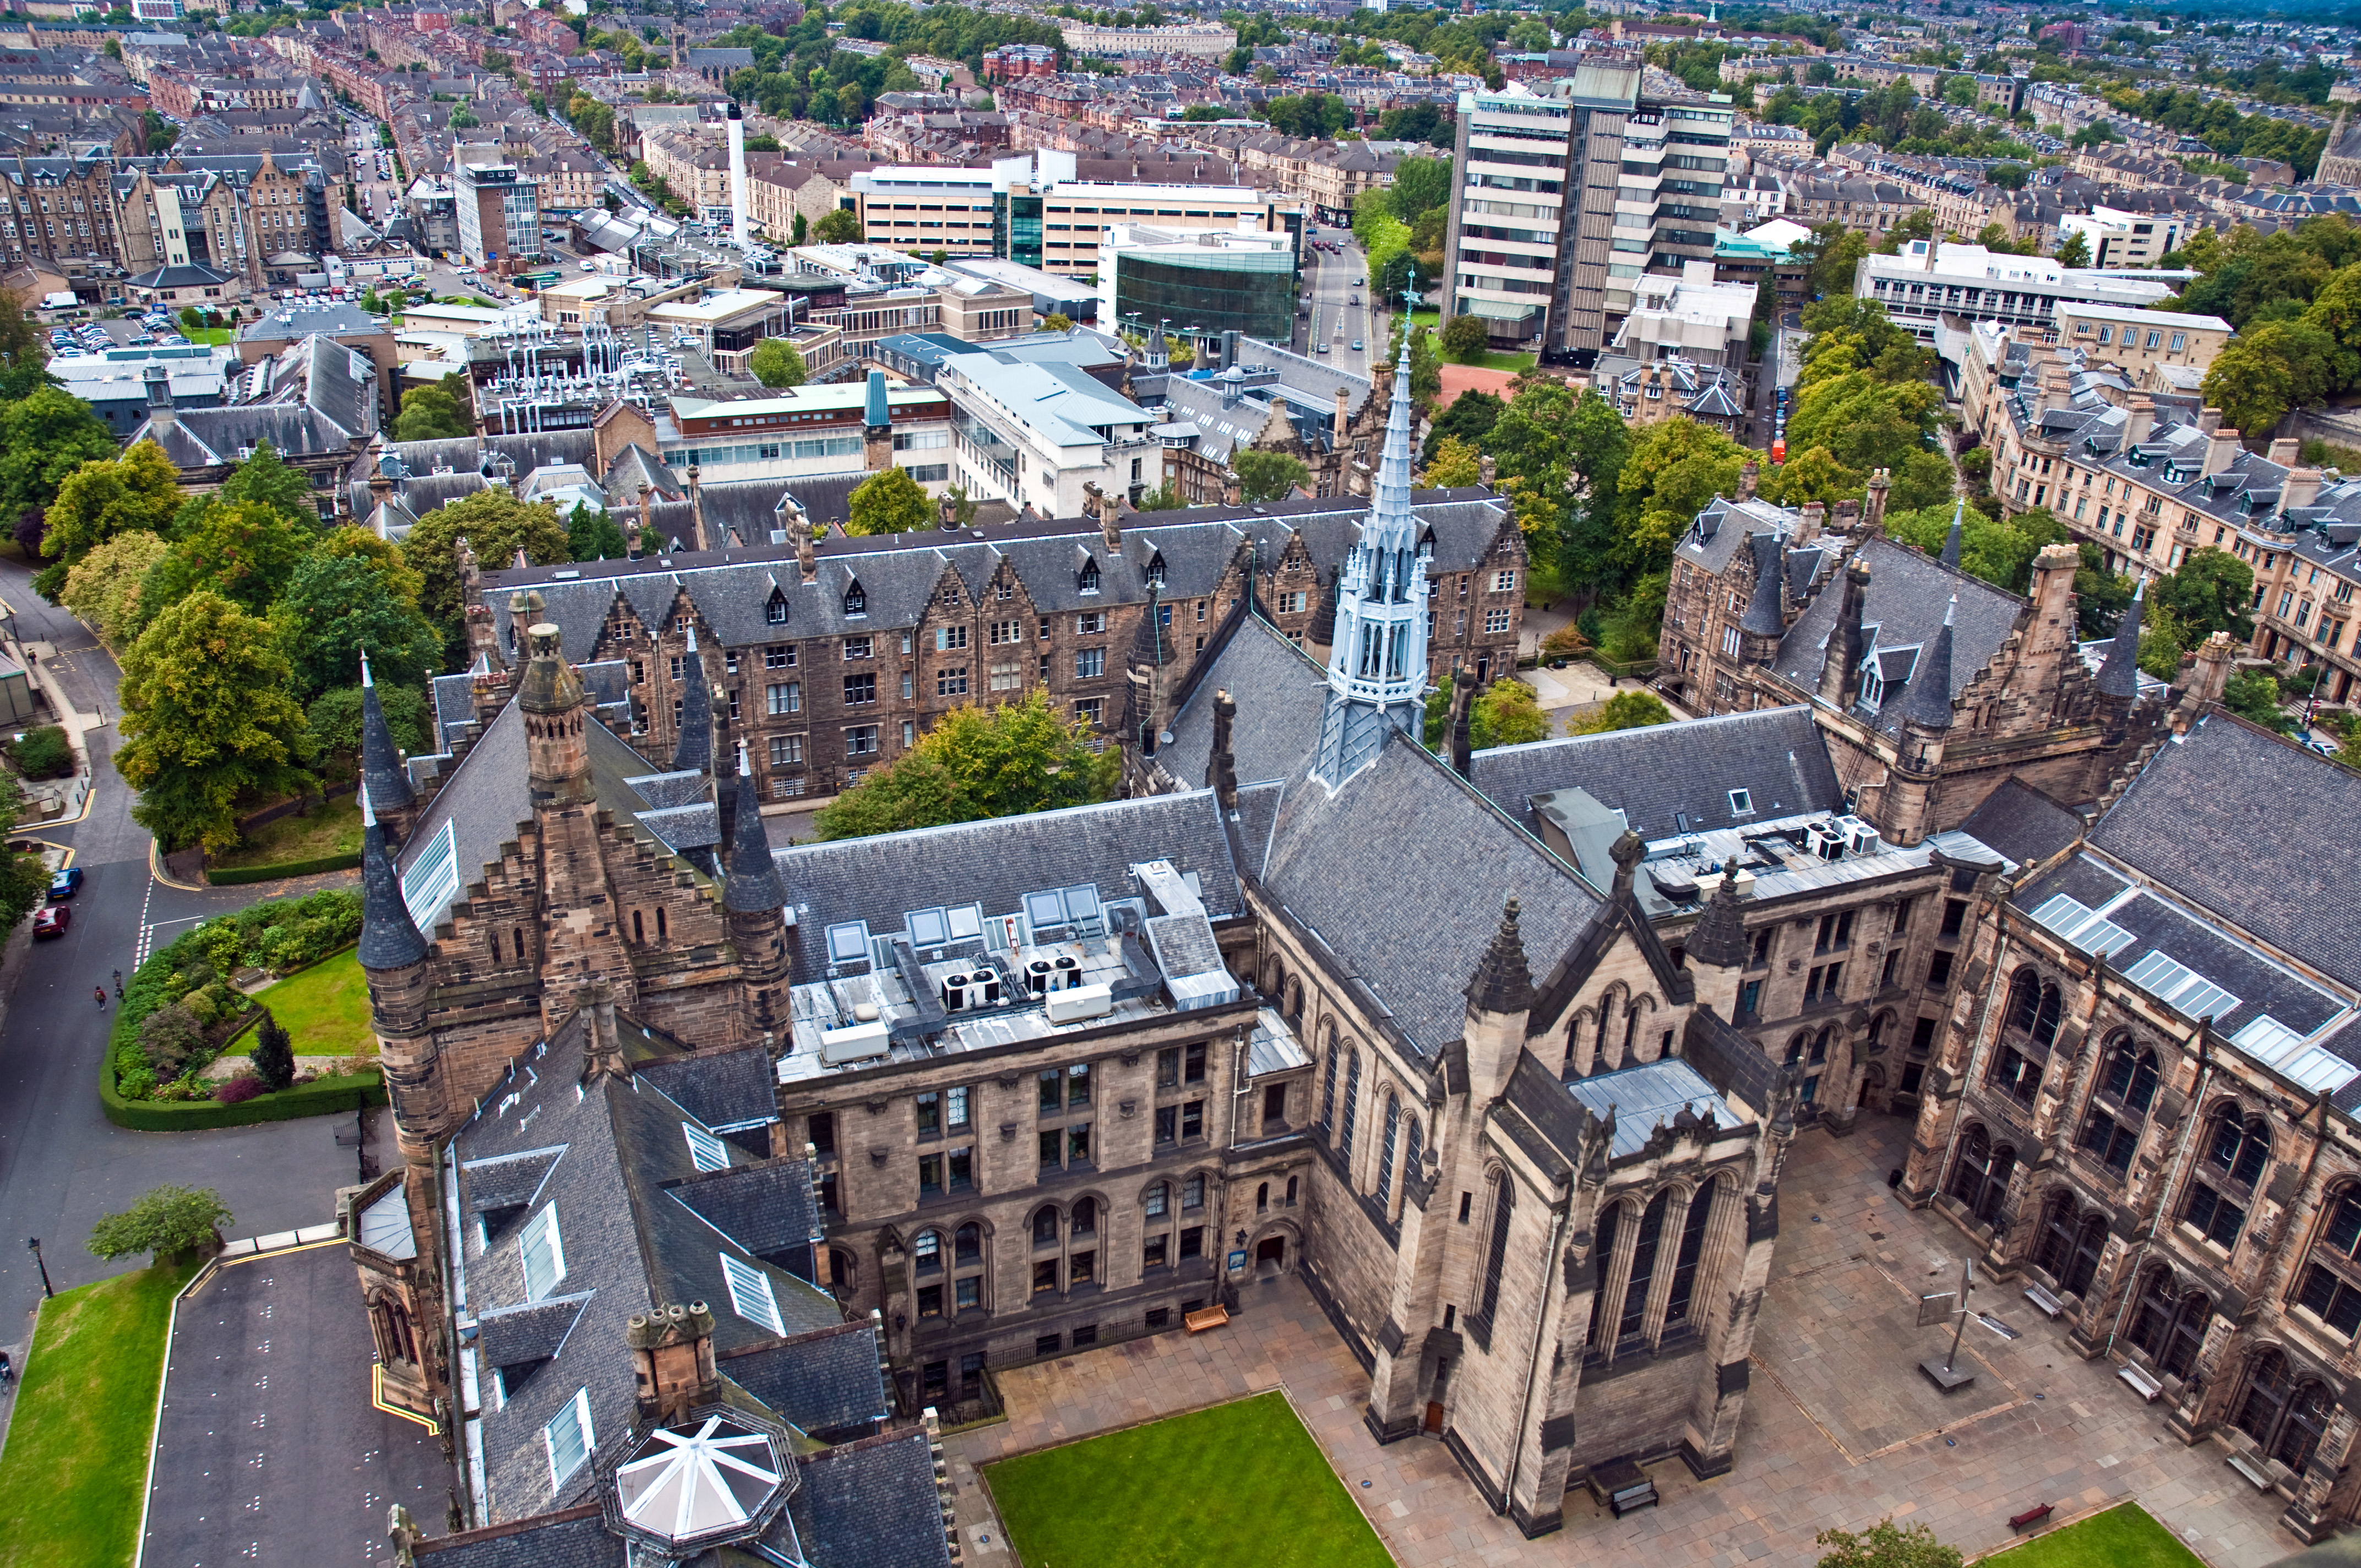 Scotland university